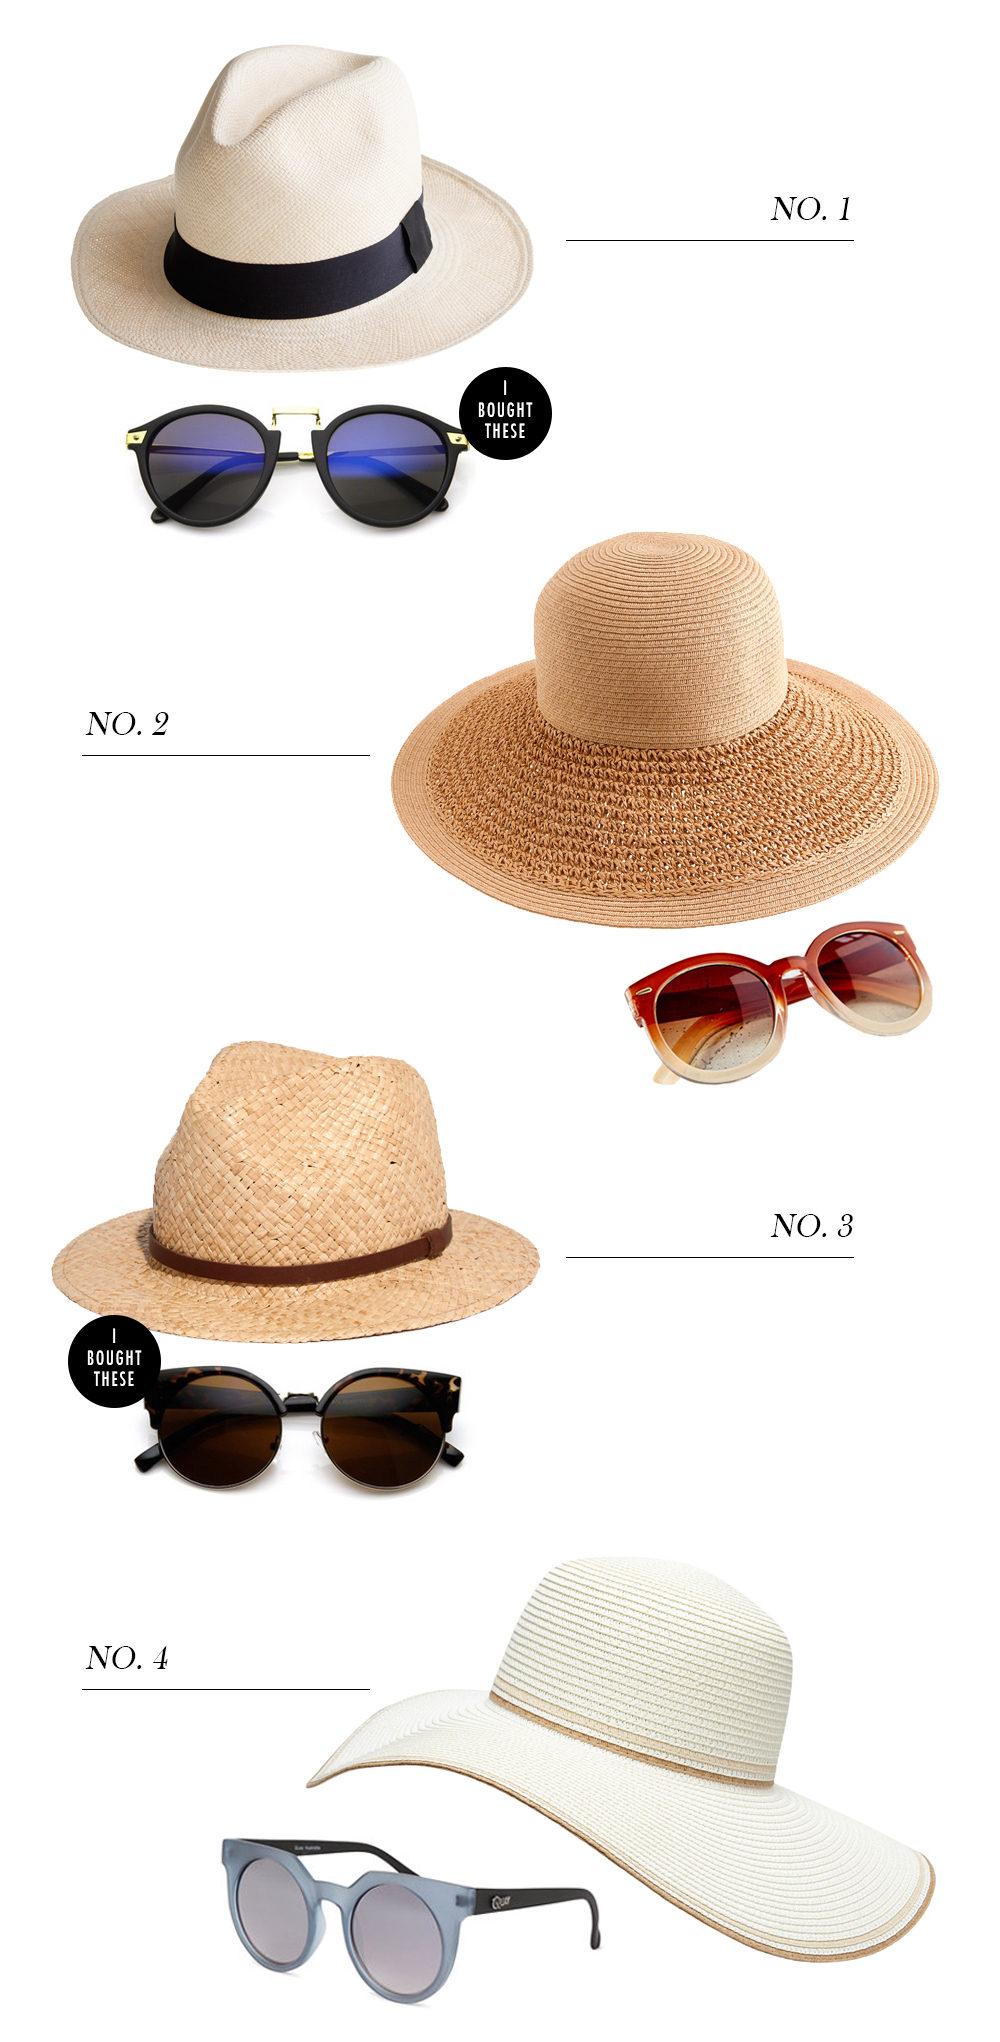 Cheap Sunglasses and Beach Hats